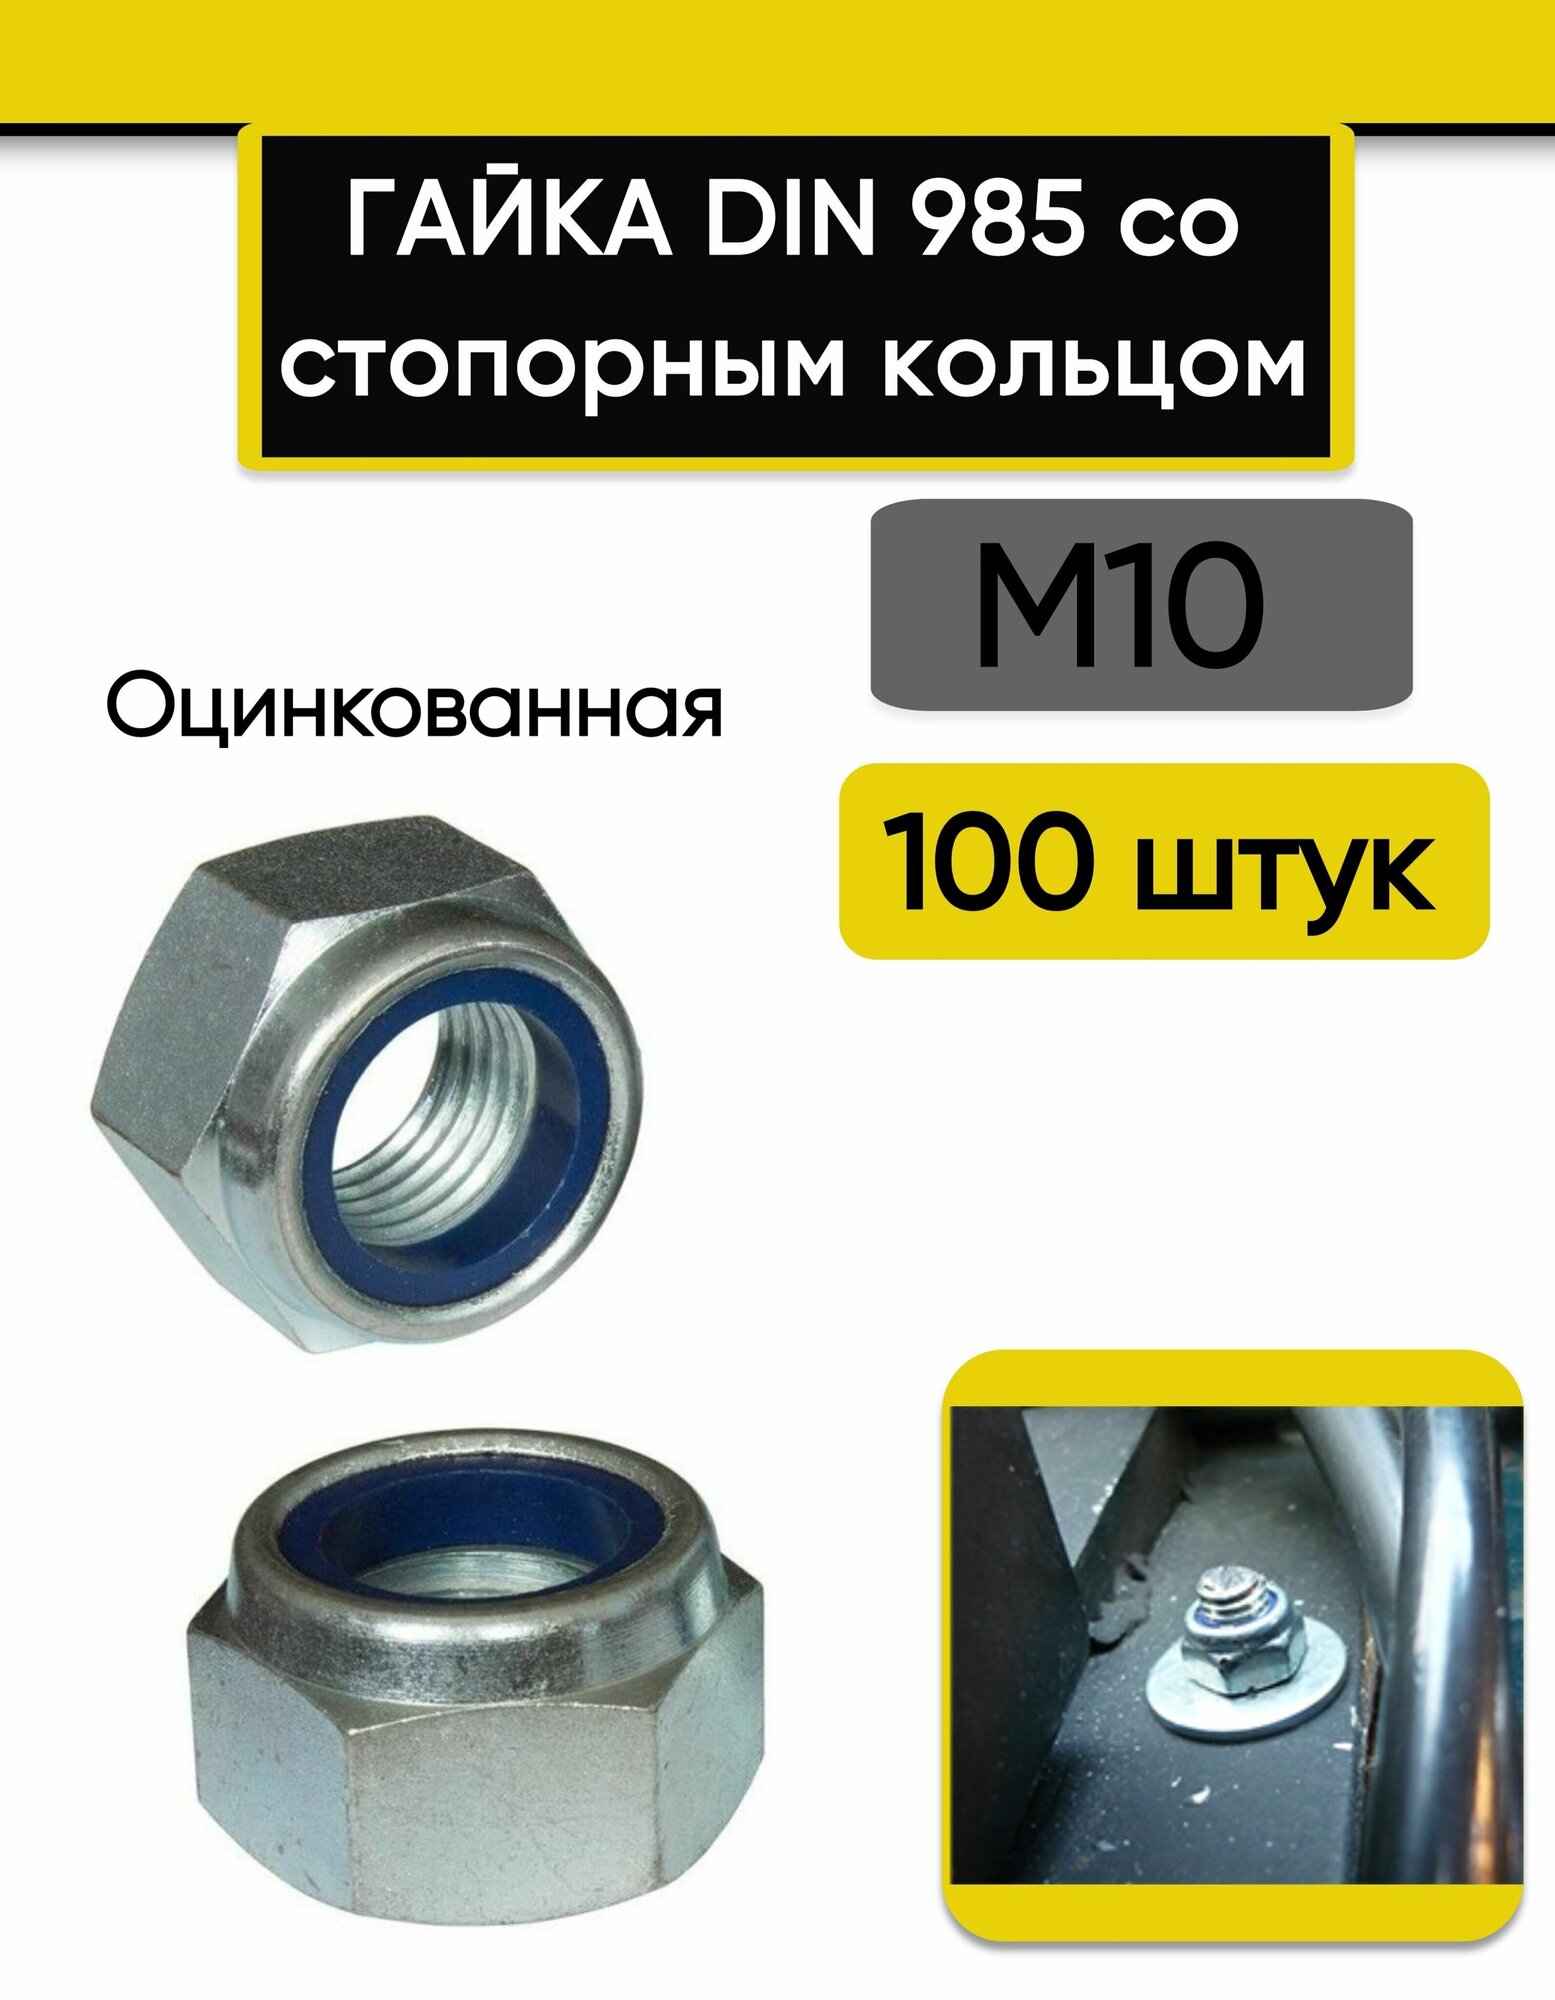 Гайка со стопорным кольцом М10, 100 шт. Оцинкованная, стальная, DIN 985